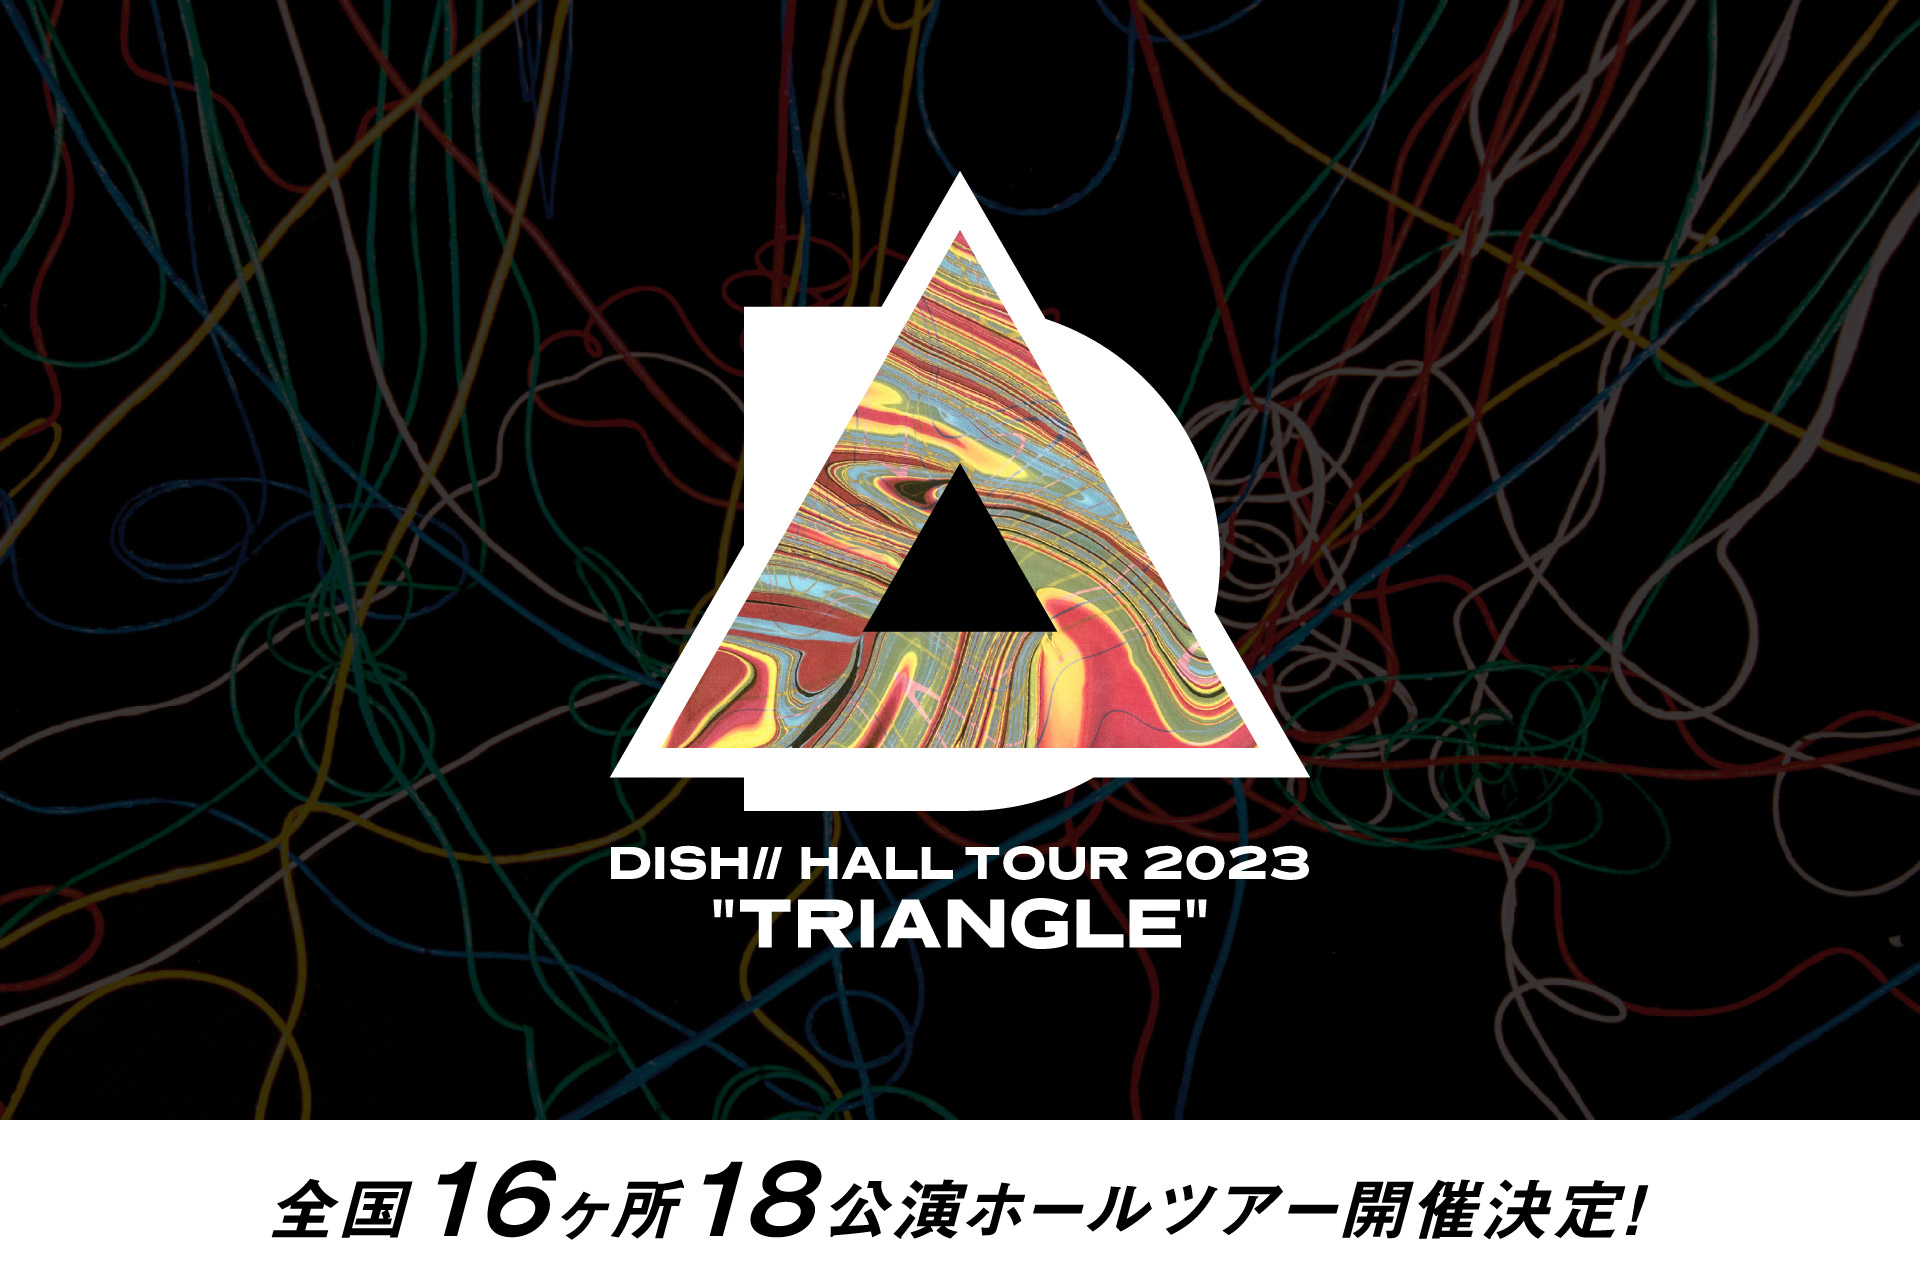 DISH// HALL TOUR 2023 "TRIANGLE"